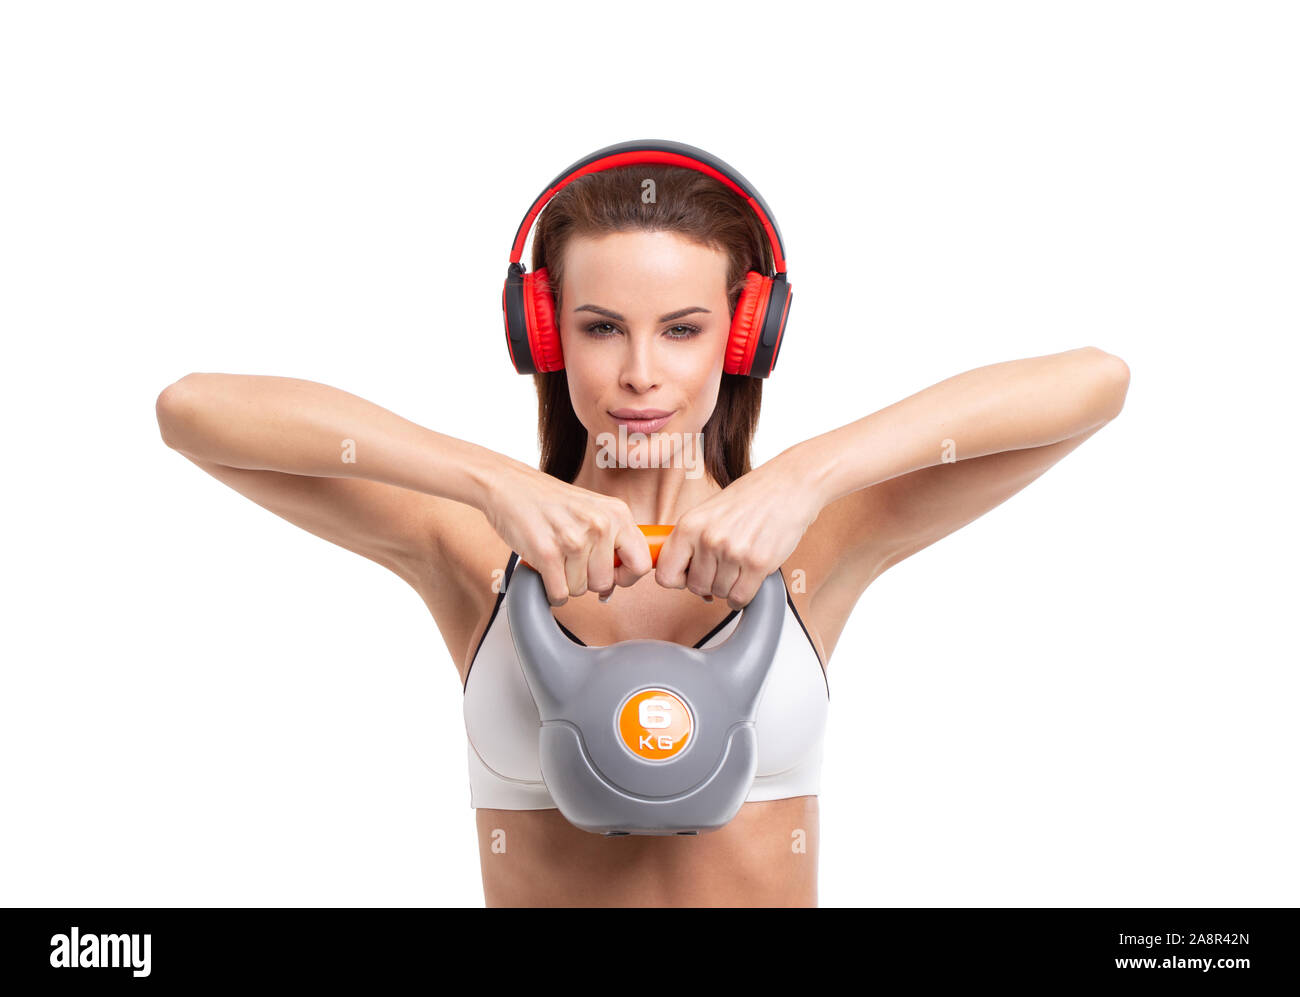 Joven mujer deportiva en auriculares celebración kettlebell aislado en blanco Foto de stock